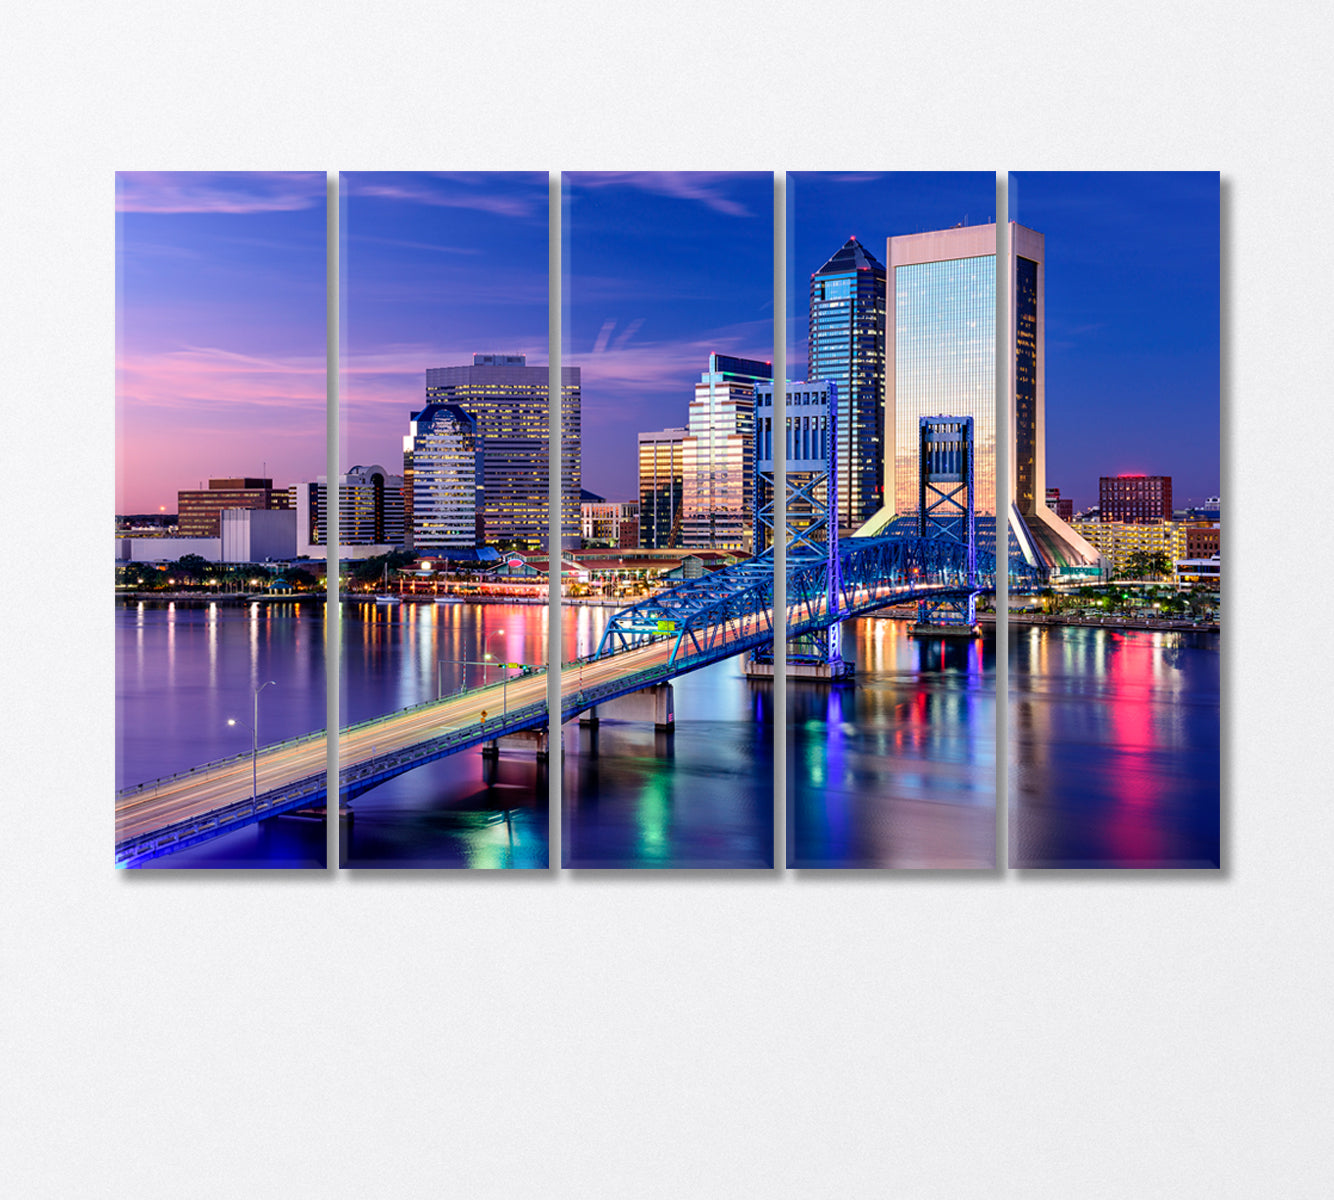 Сity Jacksonville near the St Johns River Canvas Print-Canvas Print-CetArt-5 Panels-36x24 inches-CetArt